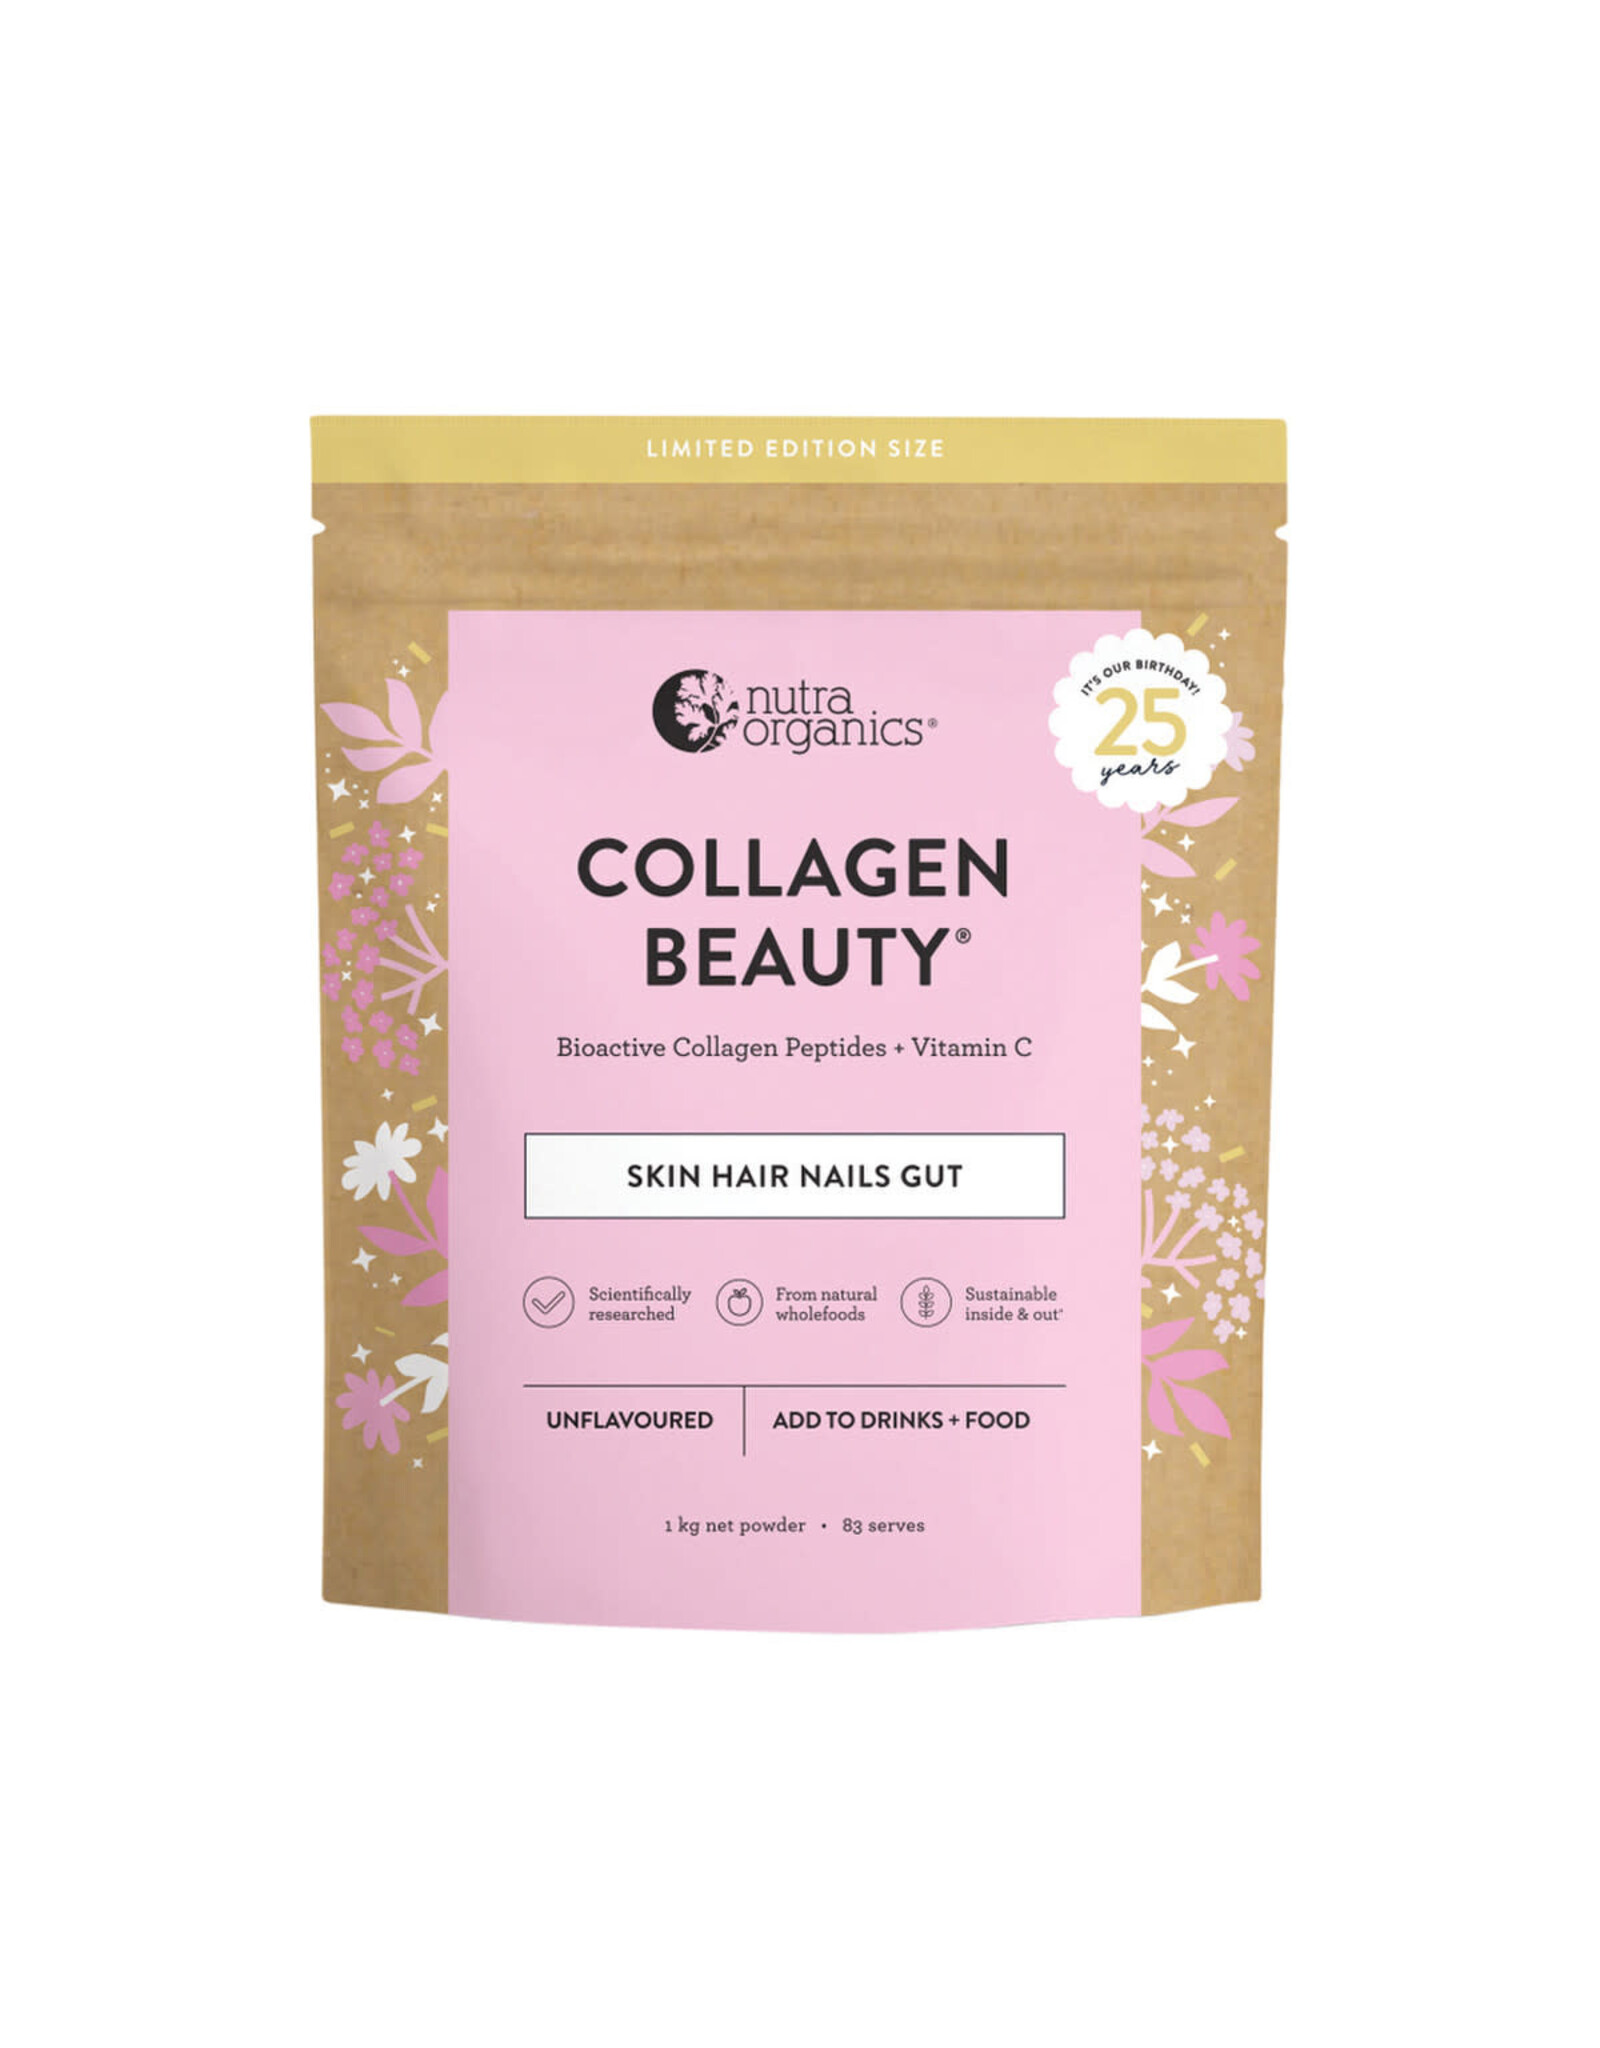 NutraOrganics Collagen Beauty with Bioactive Collagen Peptides + Vitamin C Unflavoured 1kg